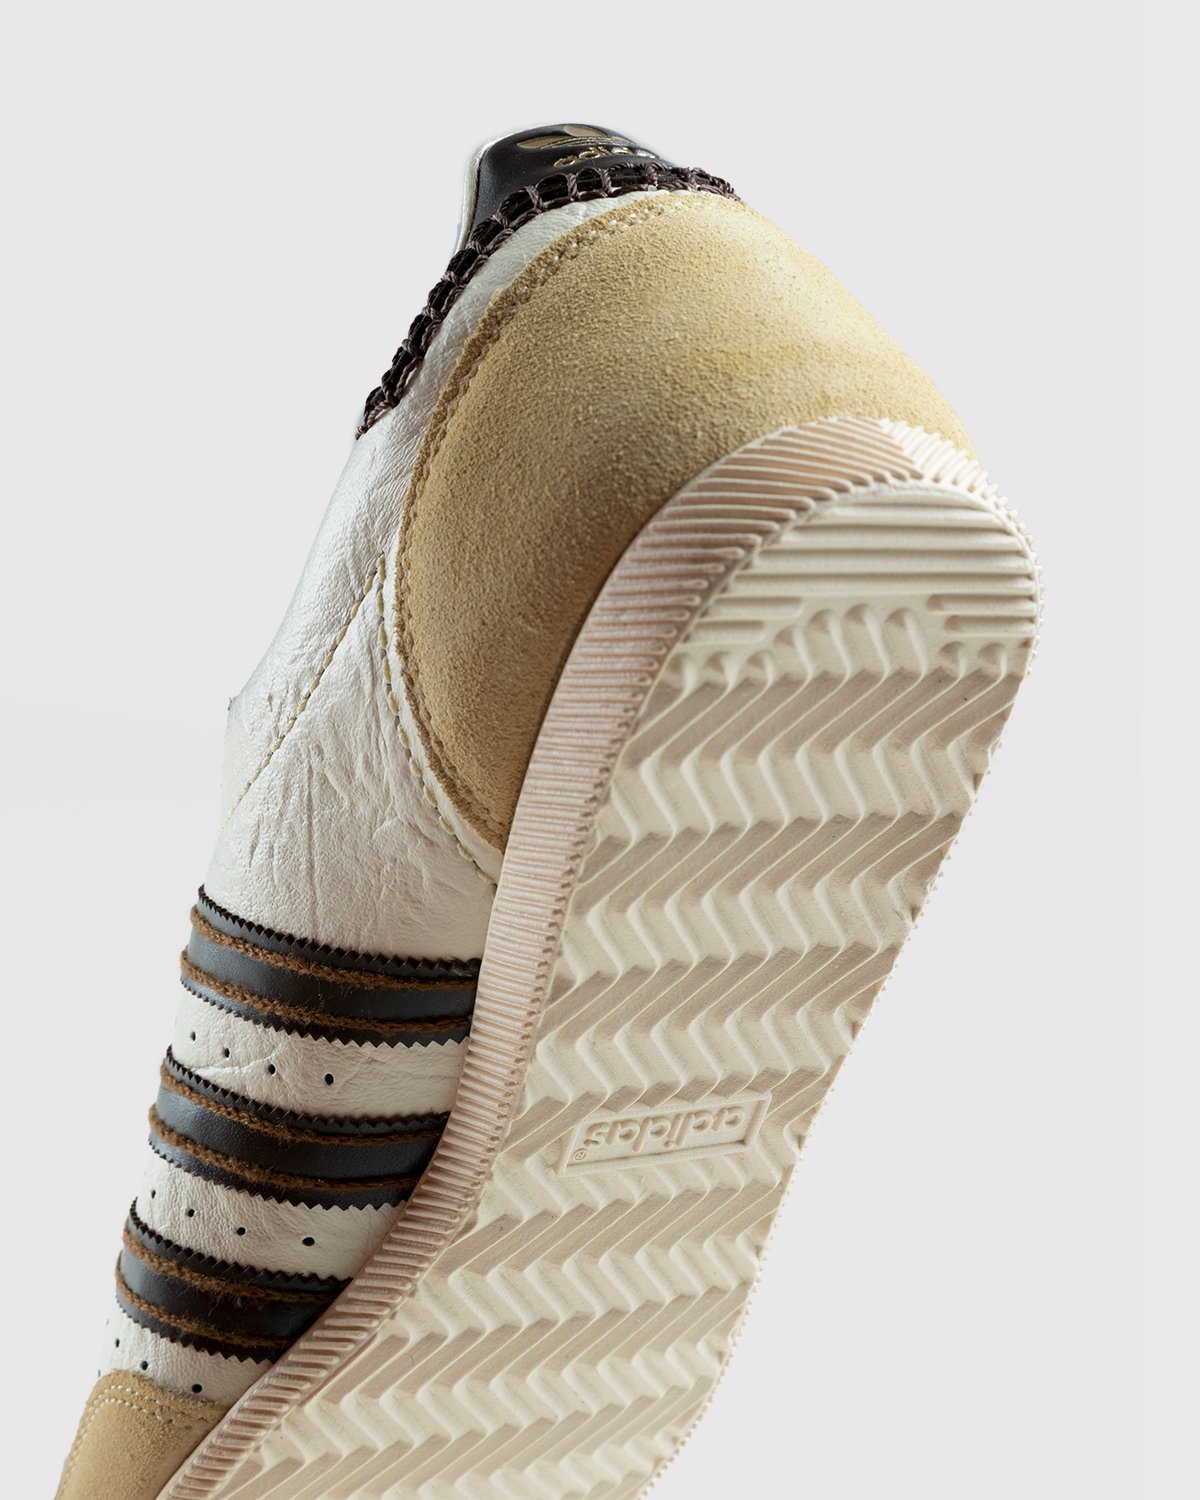 Adidas x Wales Bonner - Japan Cream White/Easy Yellow/Dark Brown - Footwear - White - Image 6